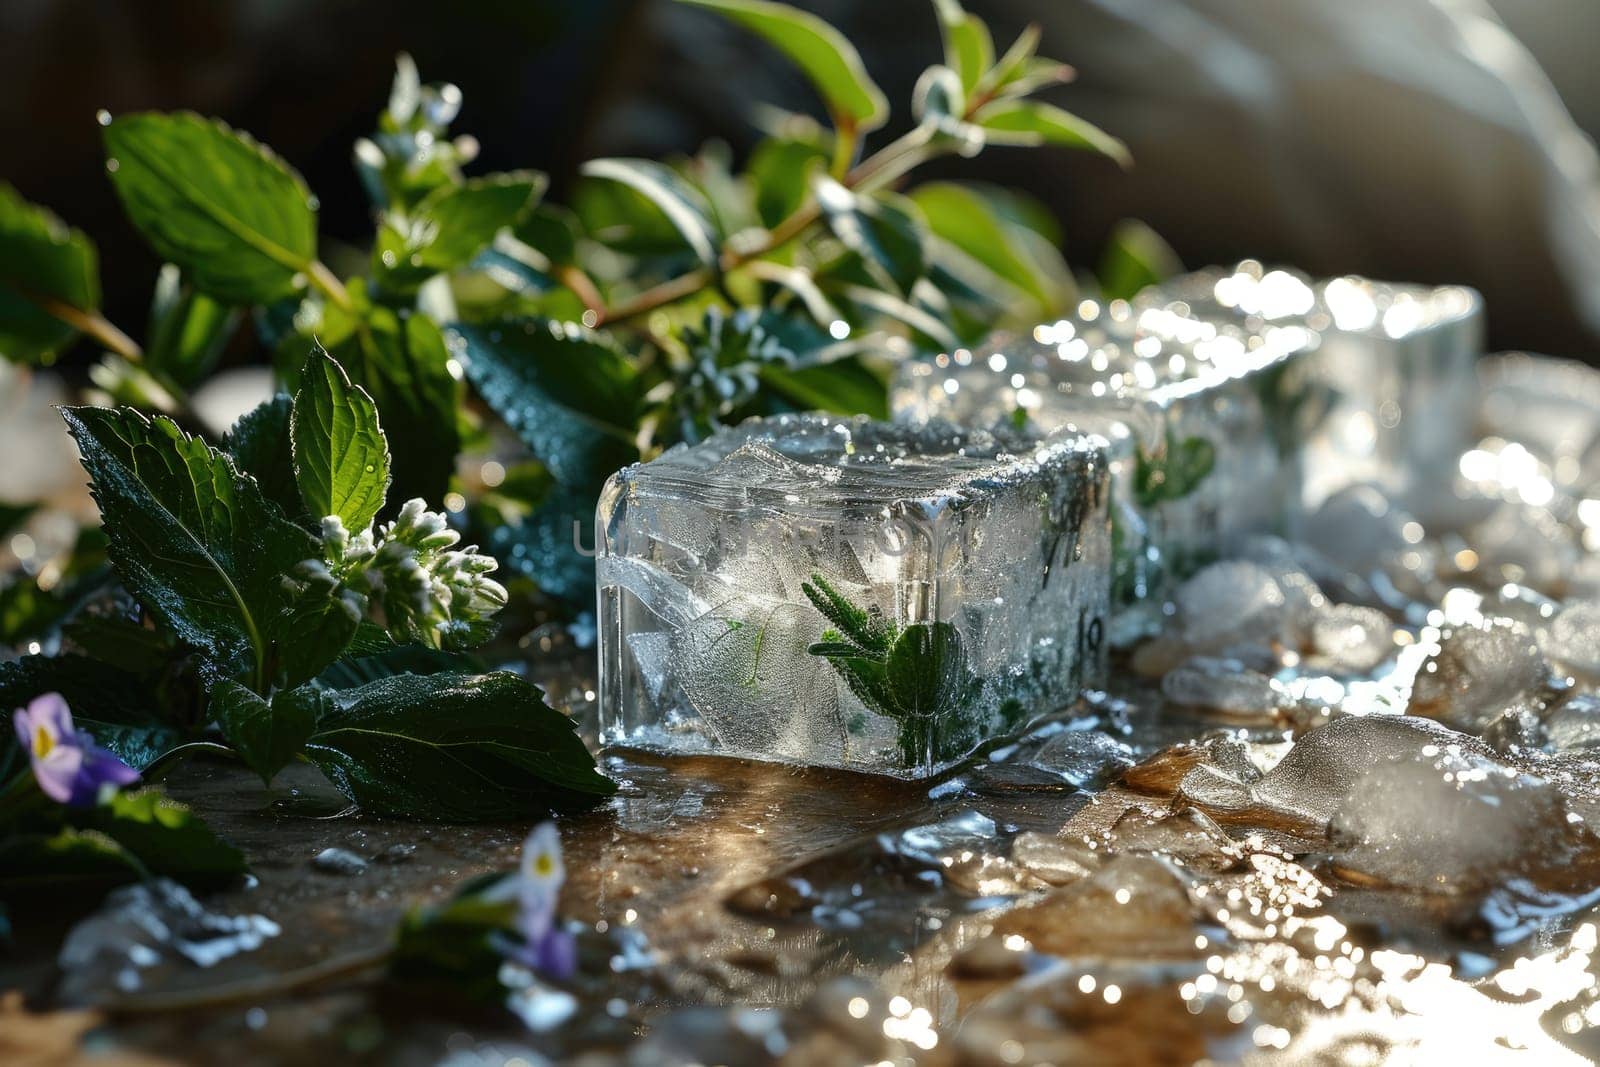 Fresh herbs in an ice cube by Yurich32